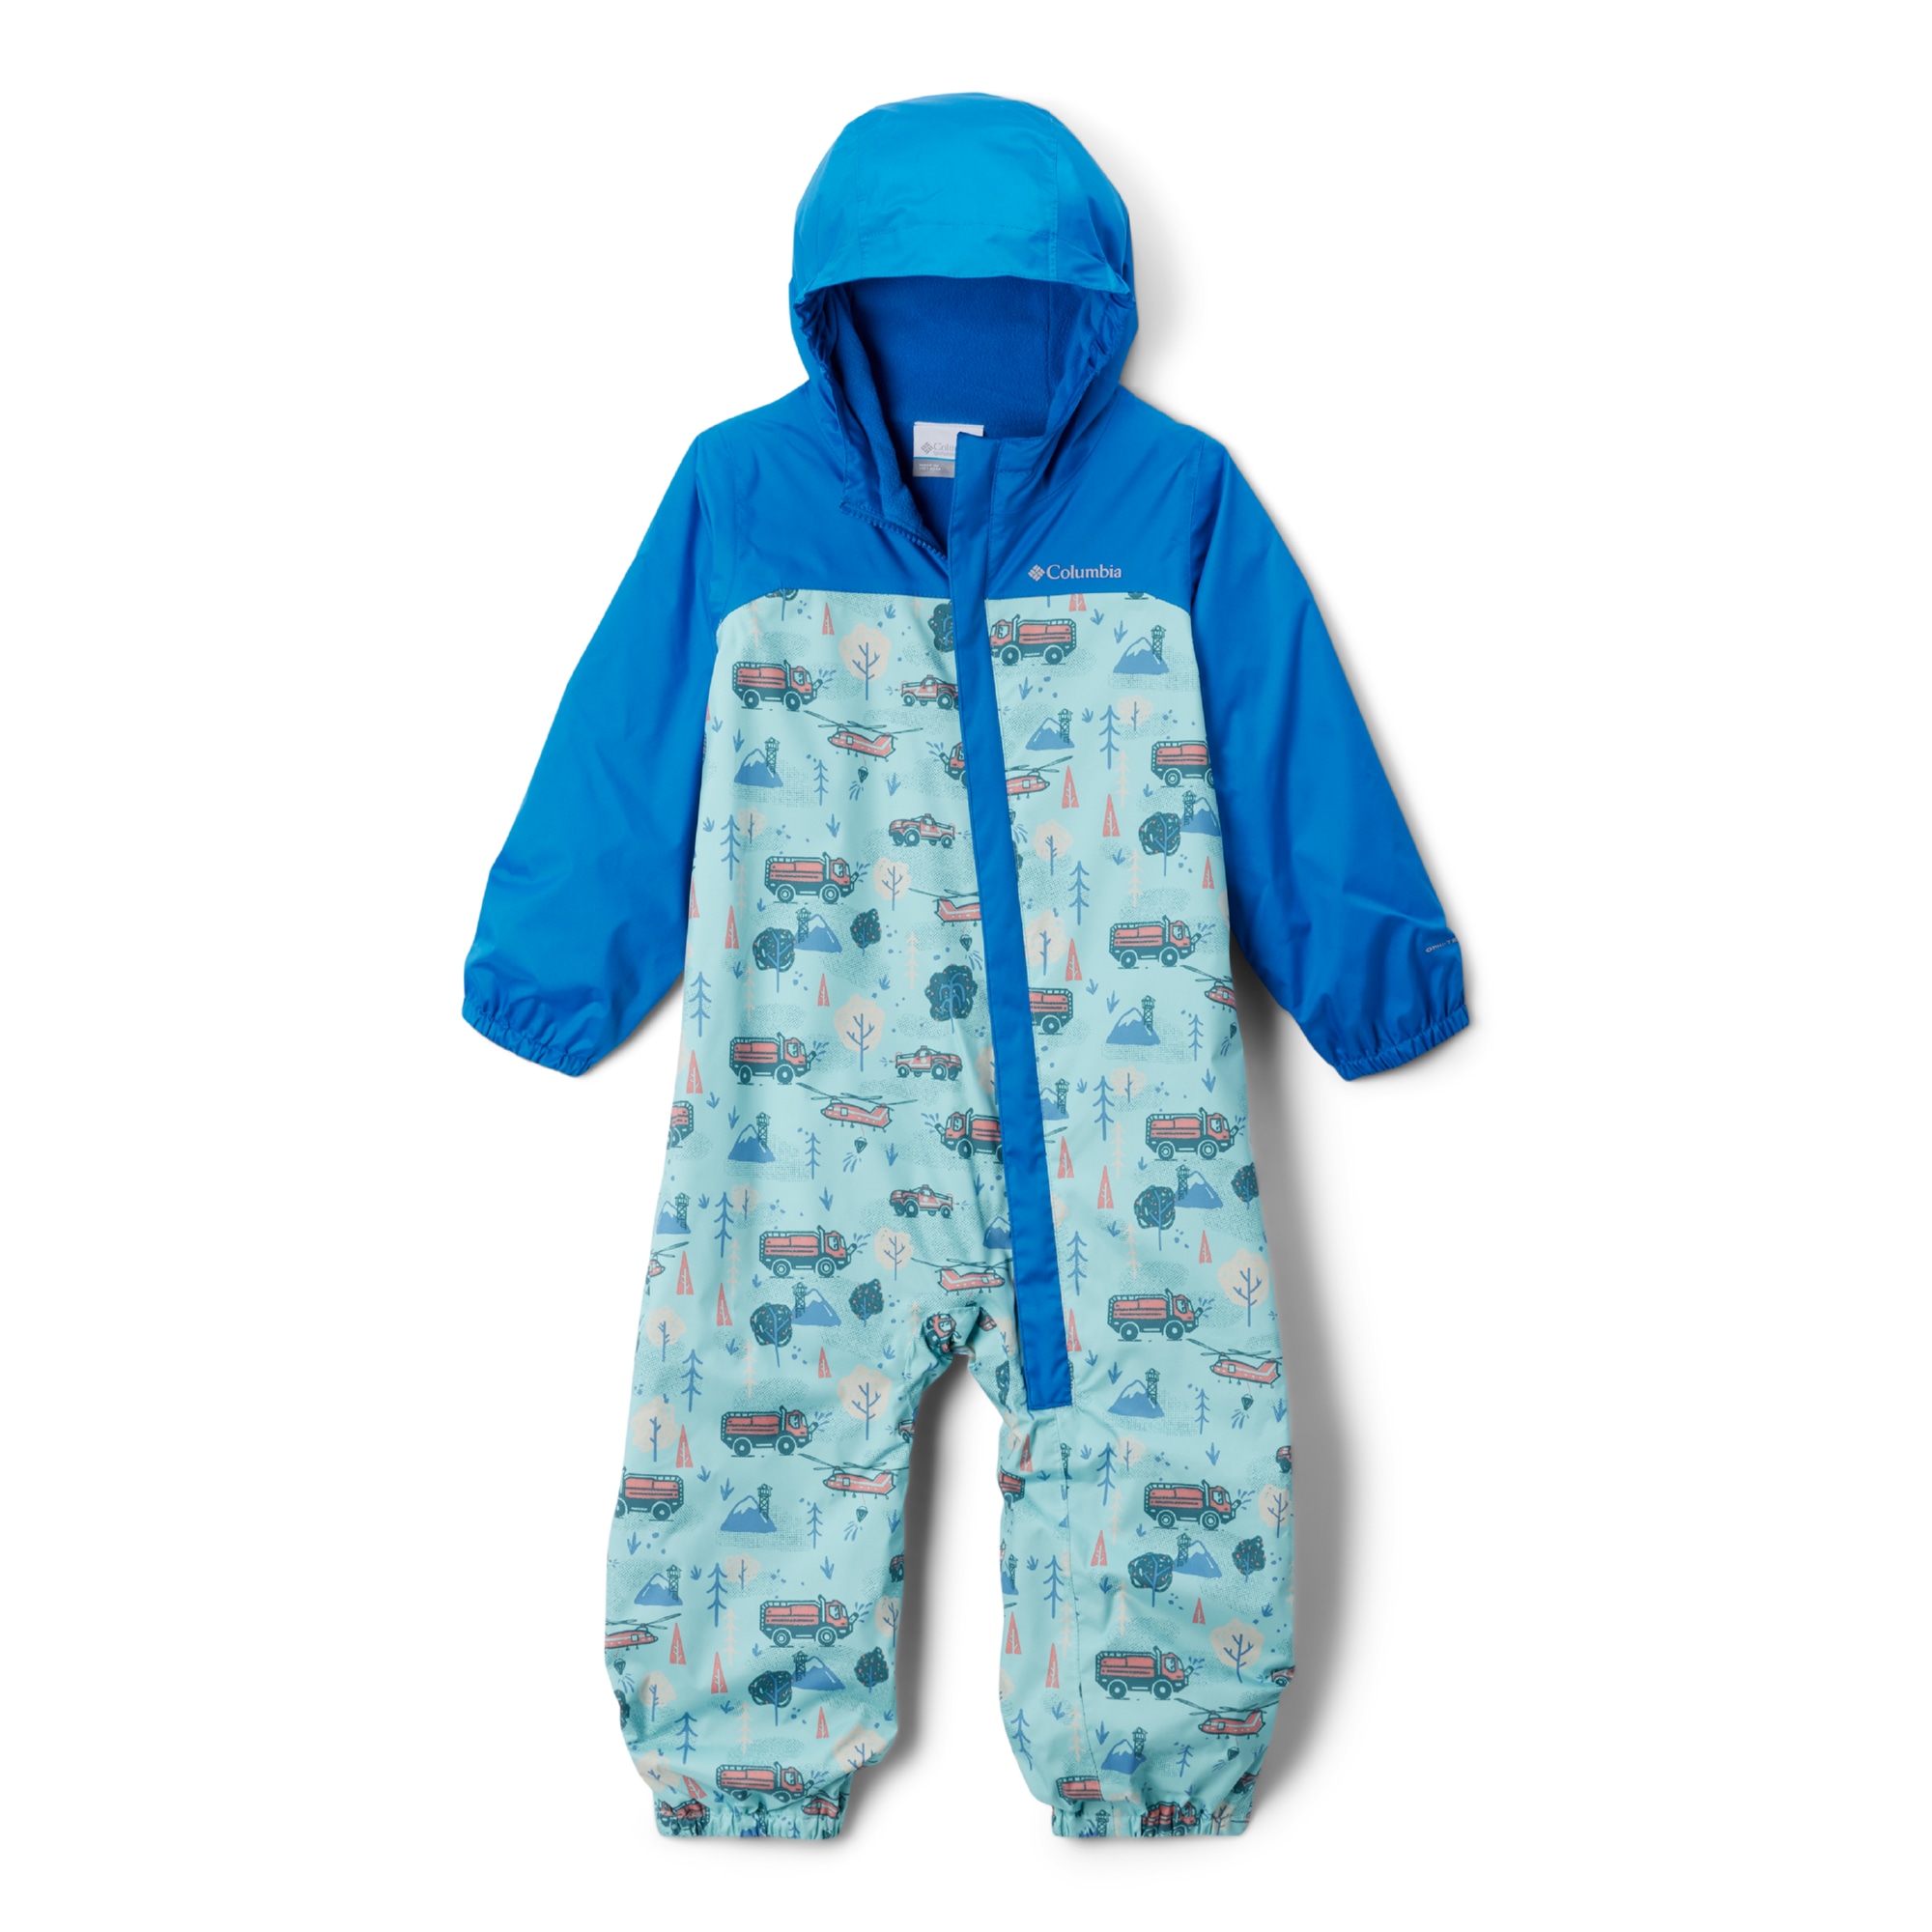 Toddlers' Critter Jitters II Waterproof Rain Suit